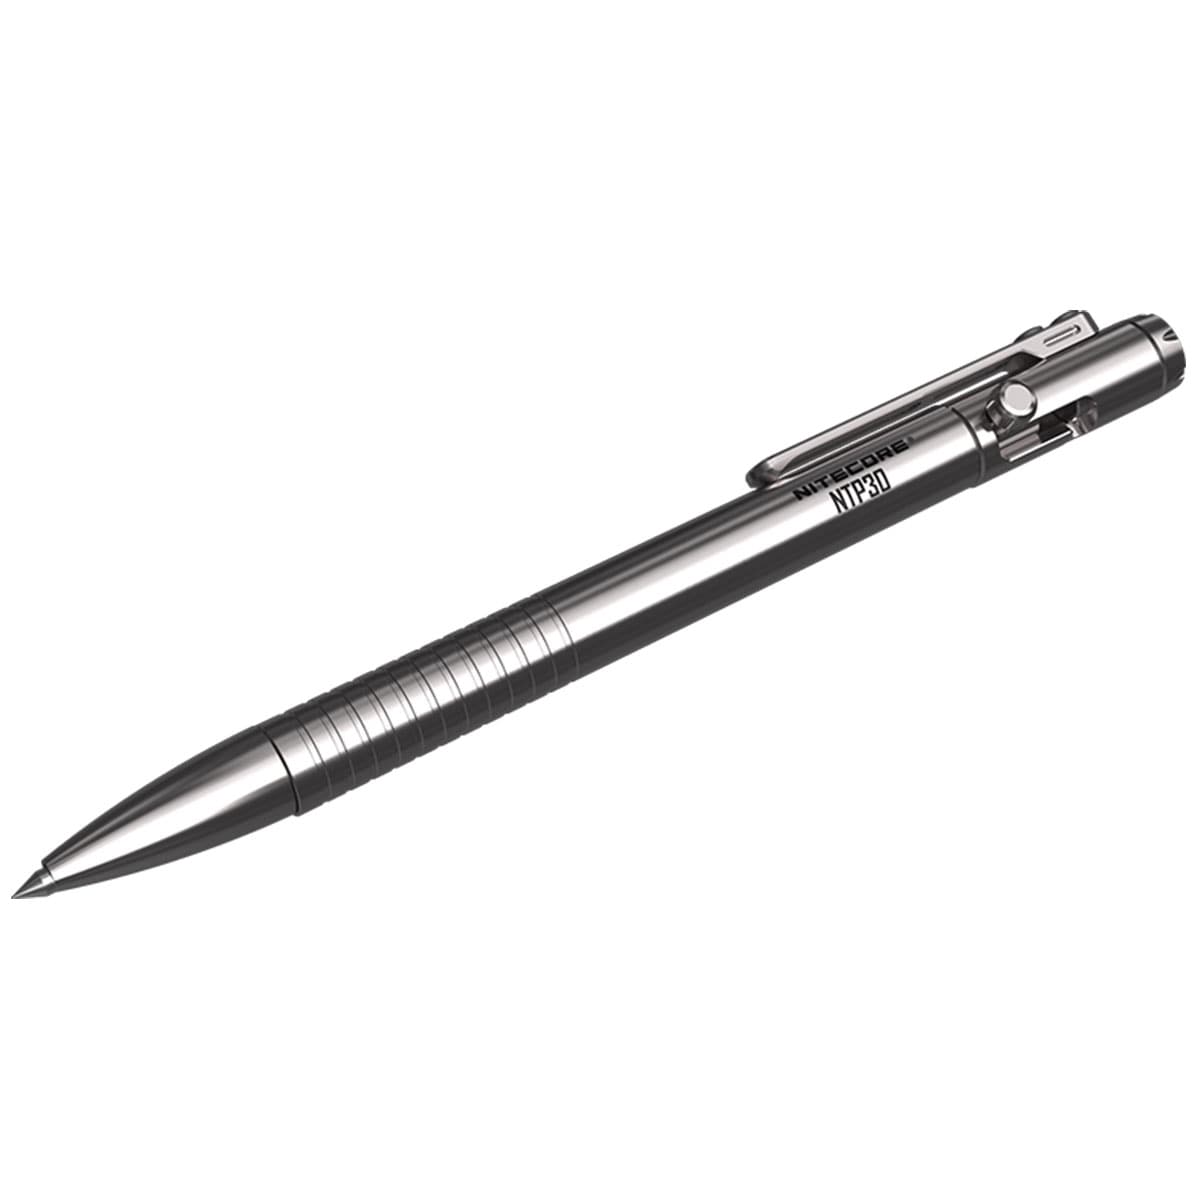 Тактична ручка Nitecore NTP30 